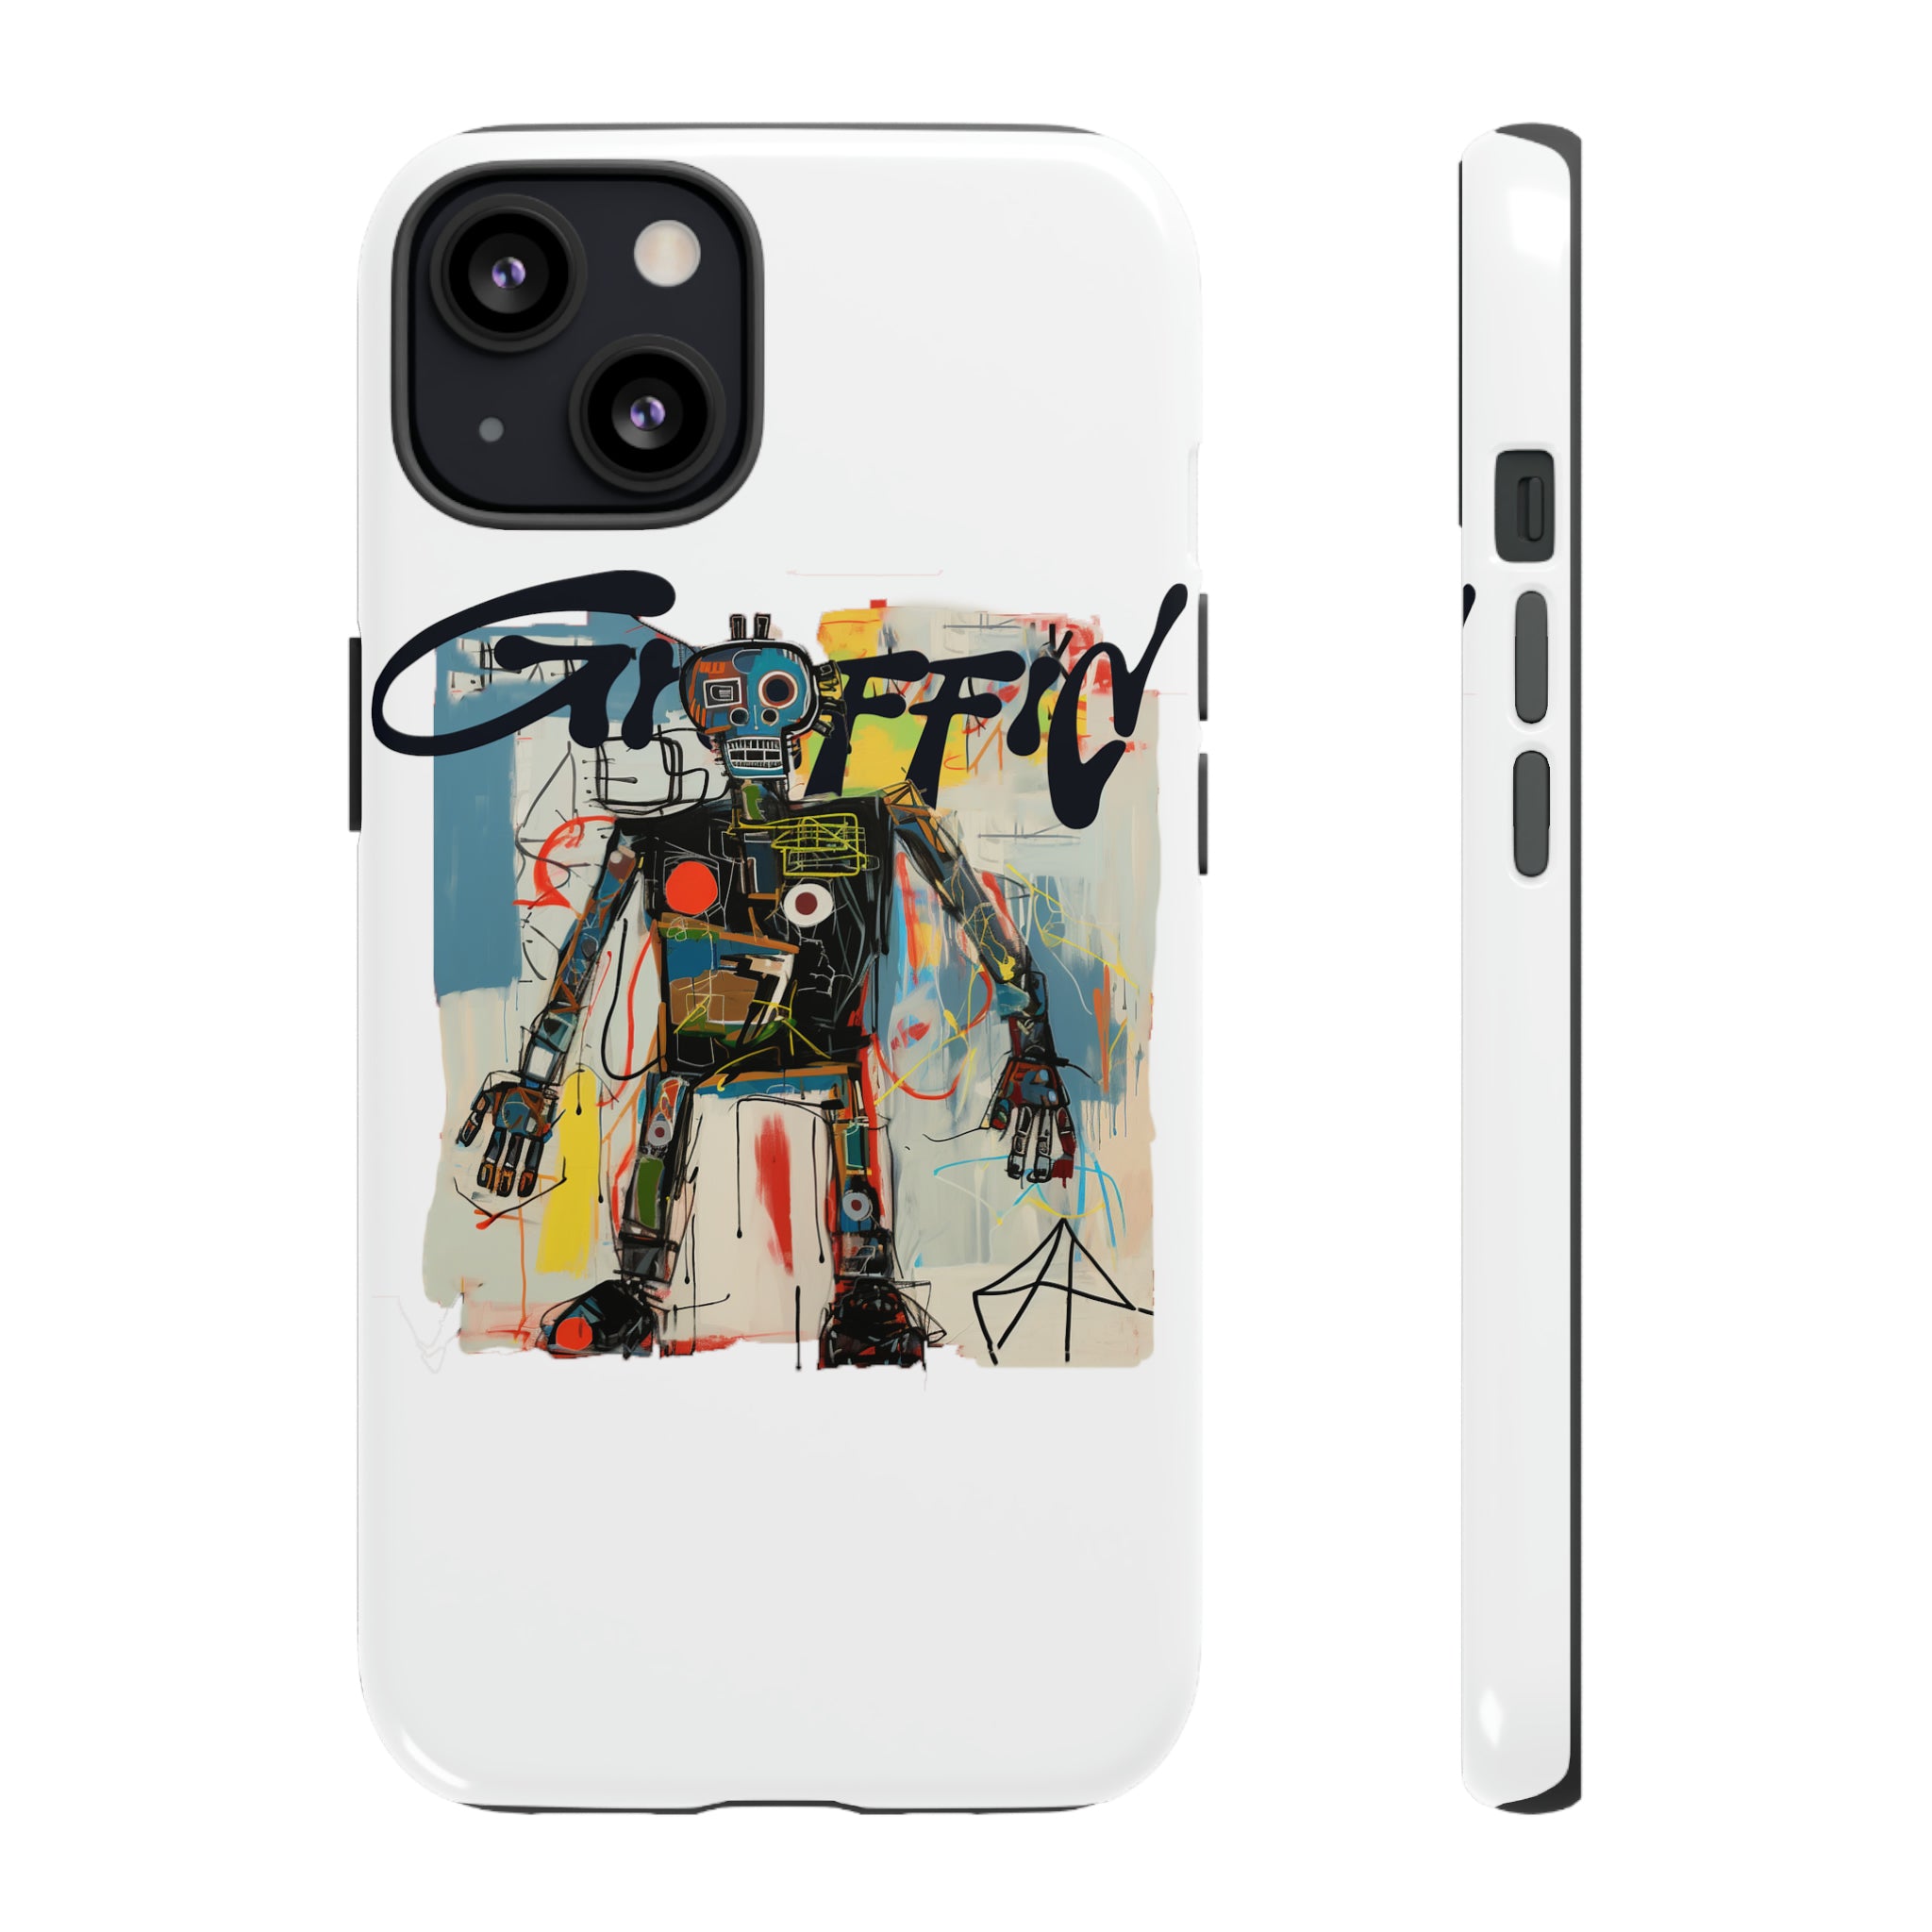 Graffid Robot Revolution iPhone Case